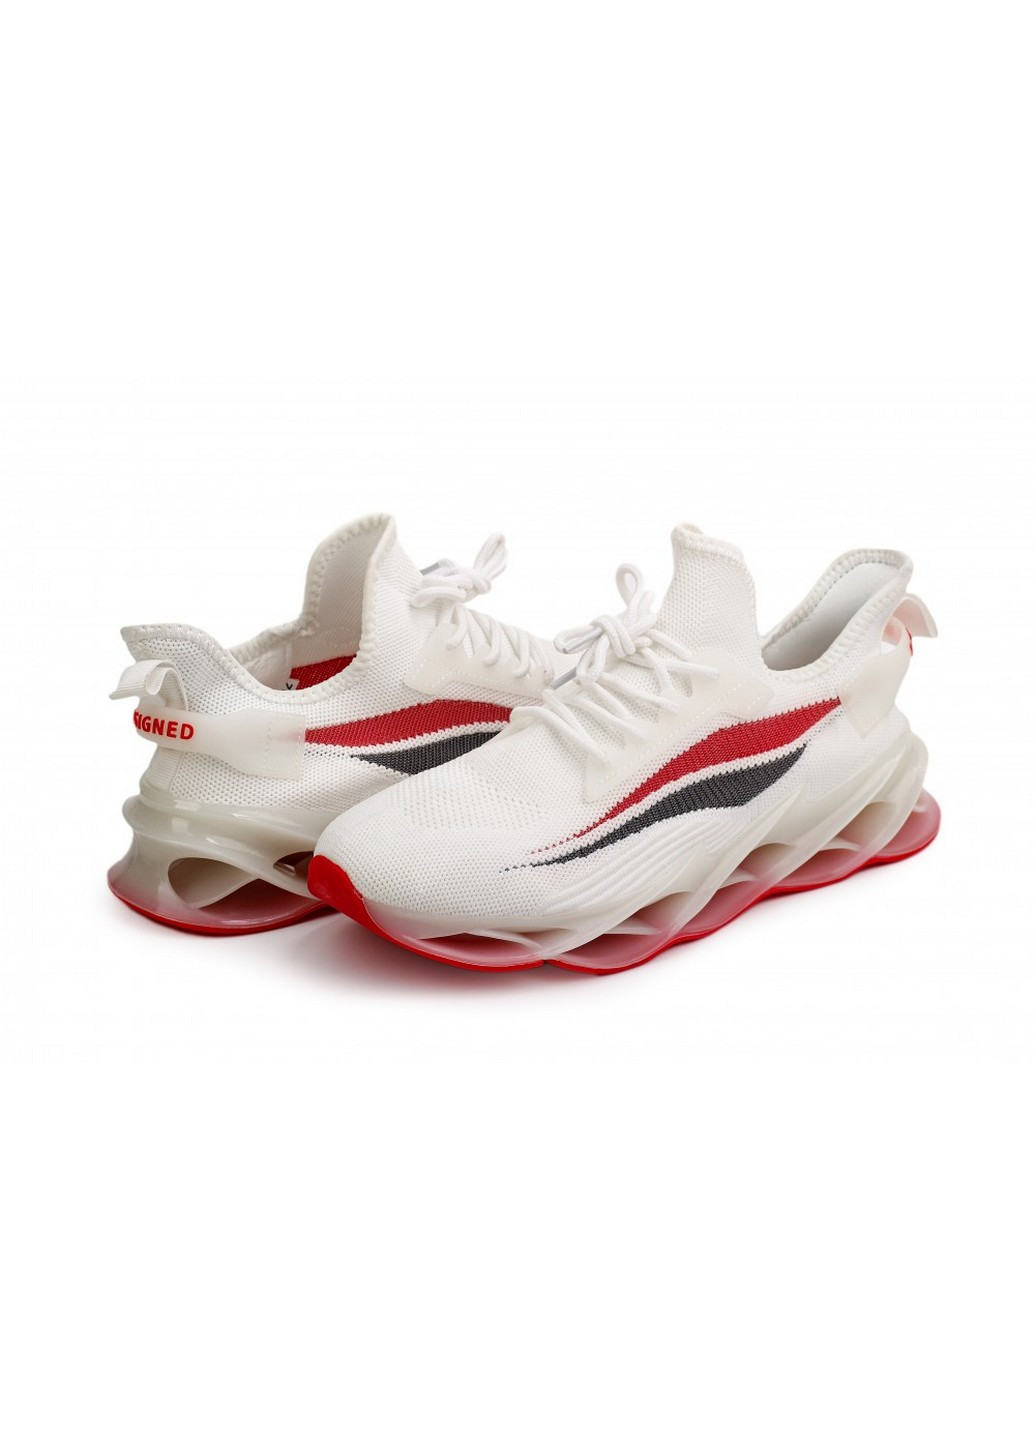 Белые демисезонные кроссовки g195white-red 45 белый (2000903791850) Erra